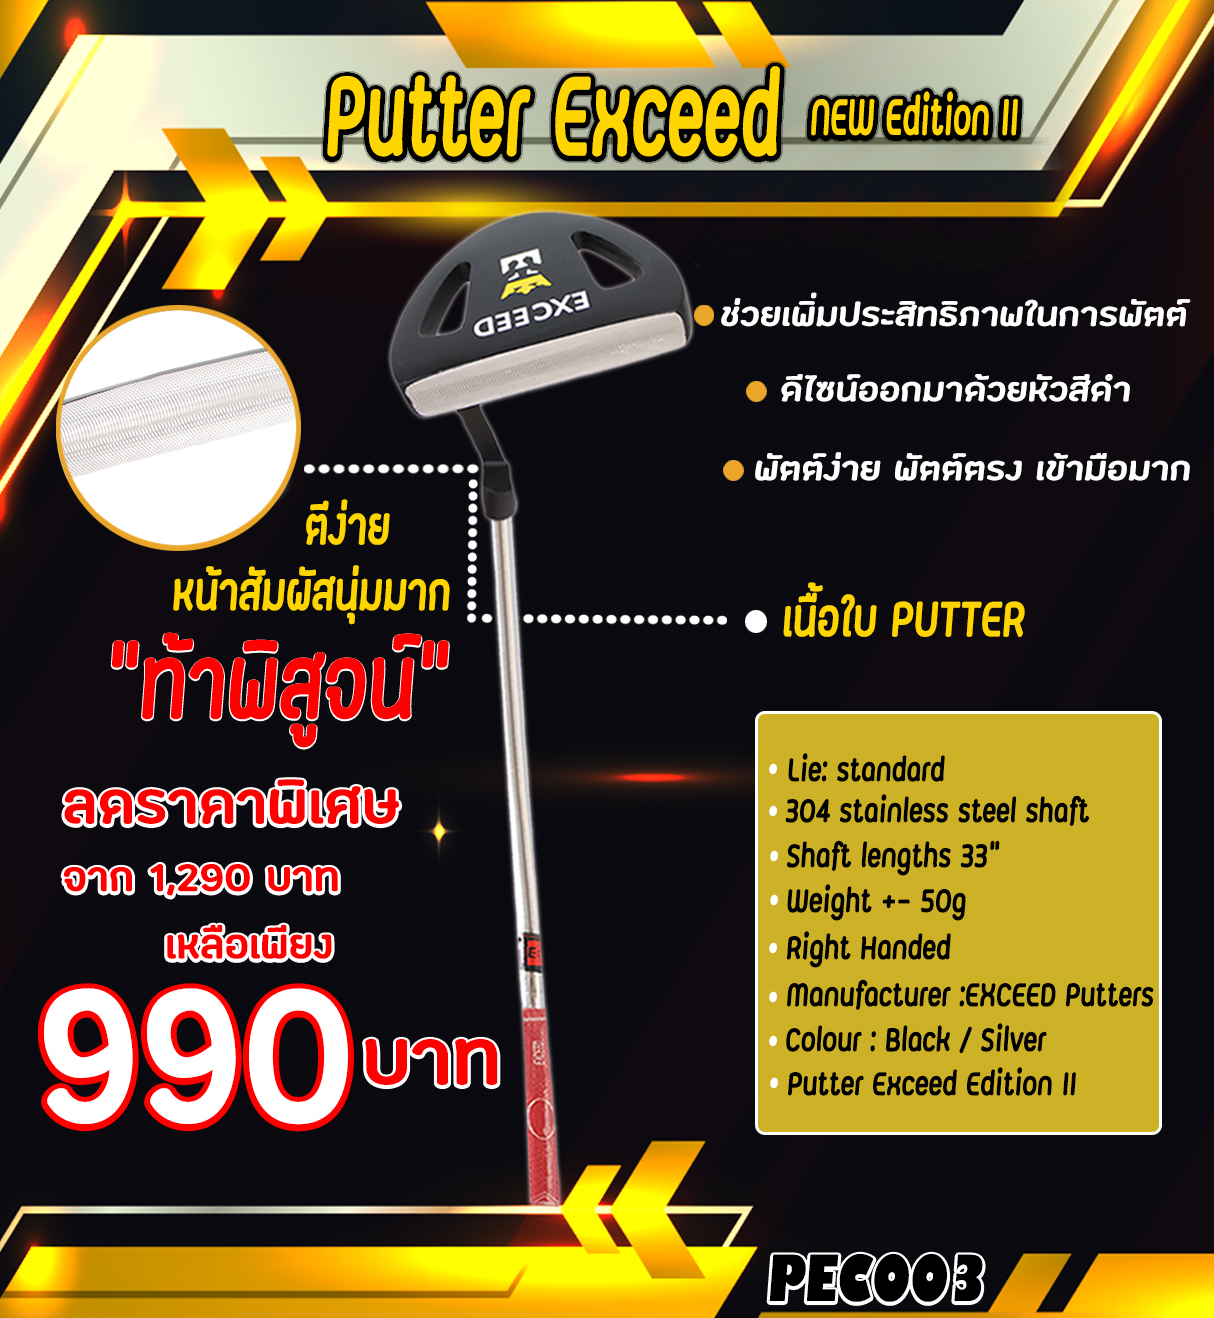 New Version Putter Exceed Silver Edition II 2021 ไม้กอล์ฟ EXCEED ไม้พัตเตอร์ สำหรับกีฬากอล์ฟ PEC003